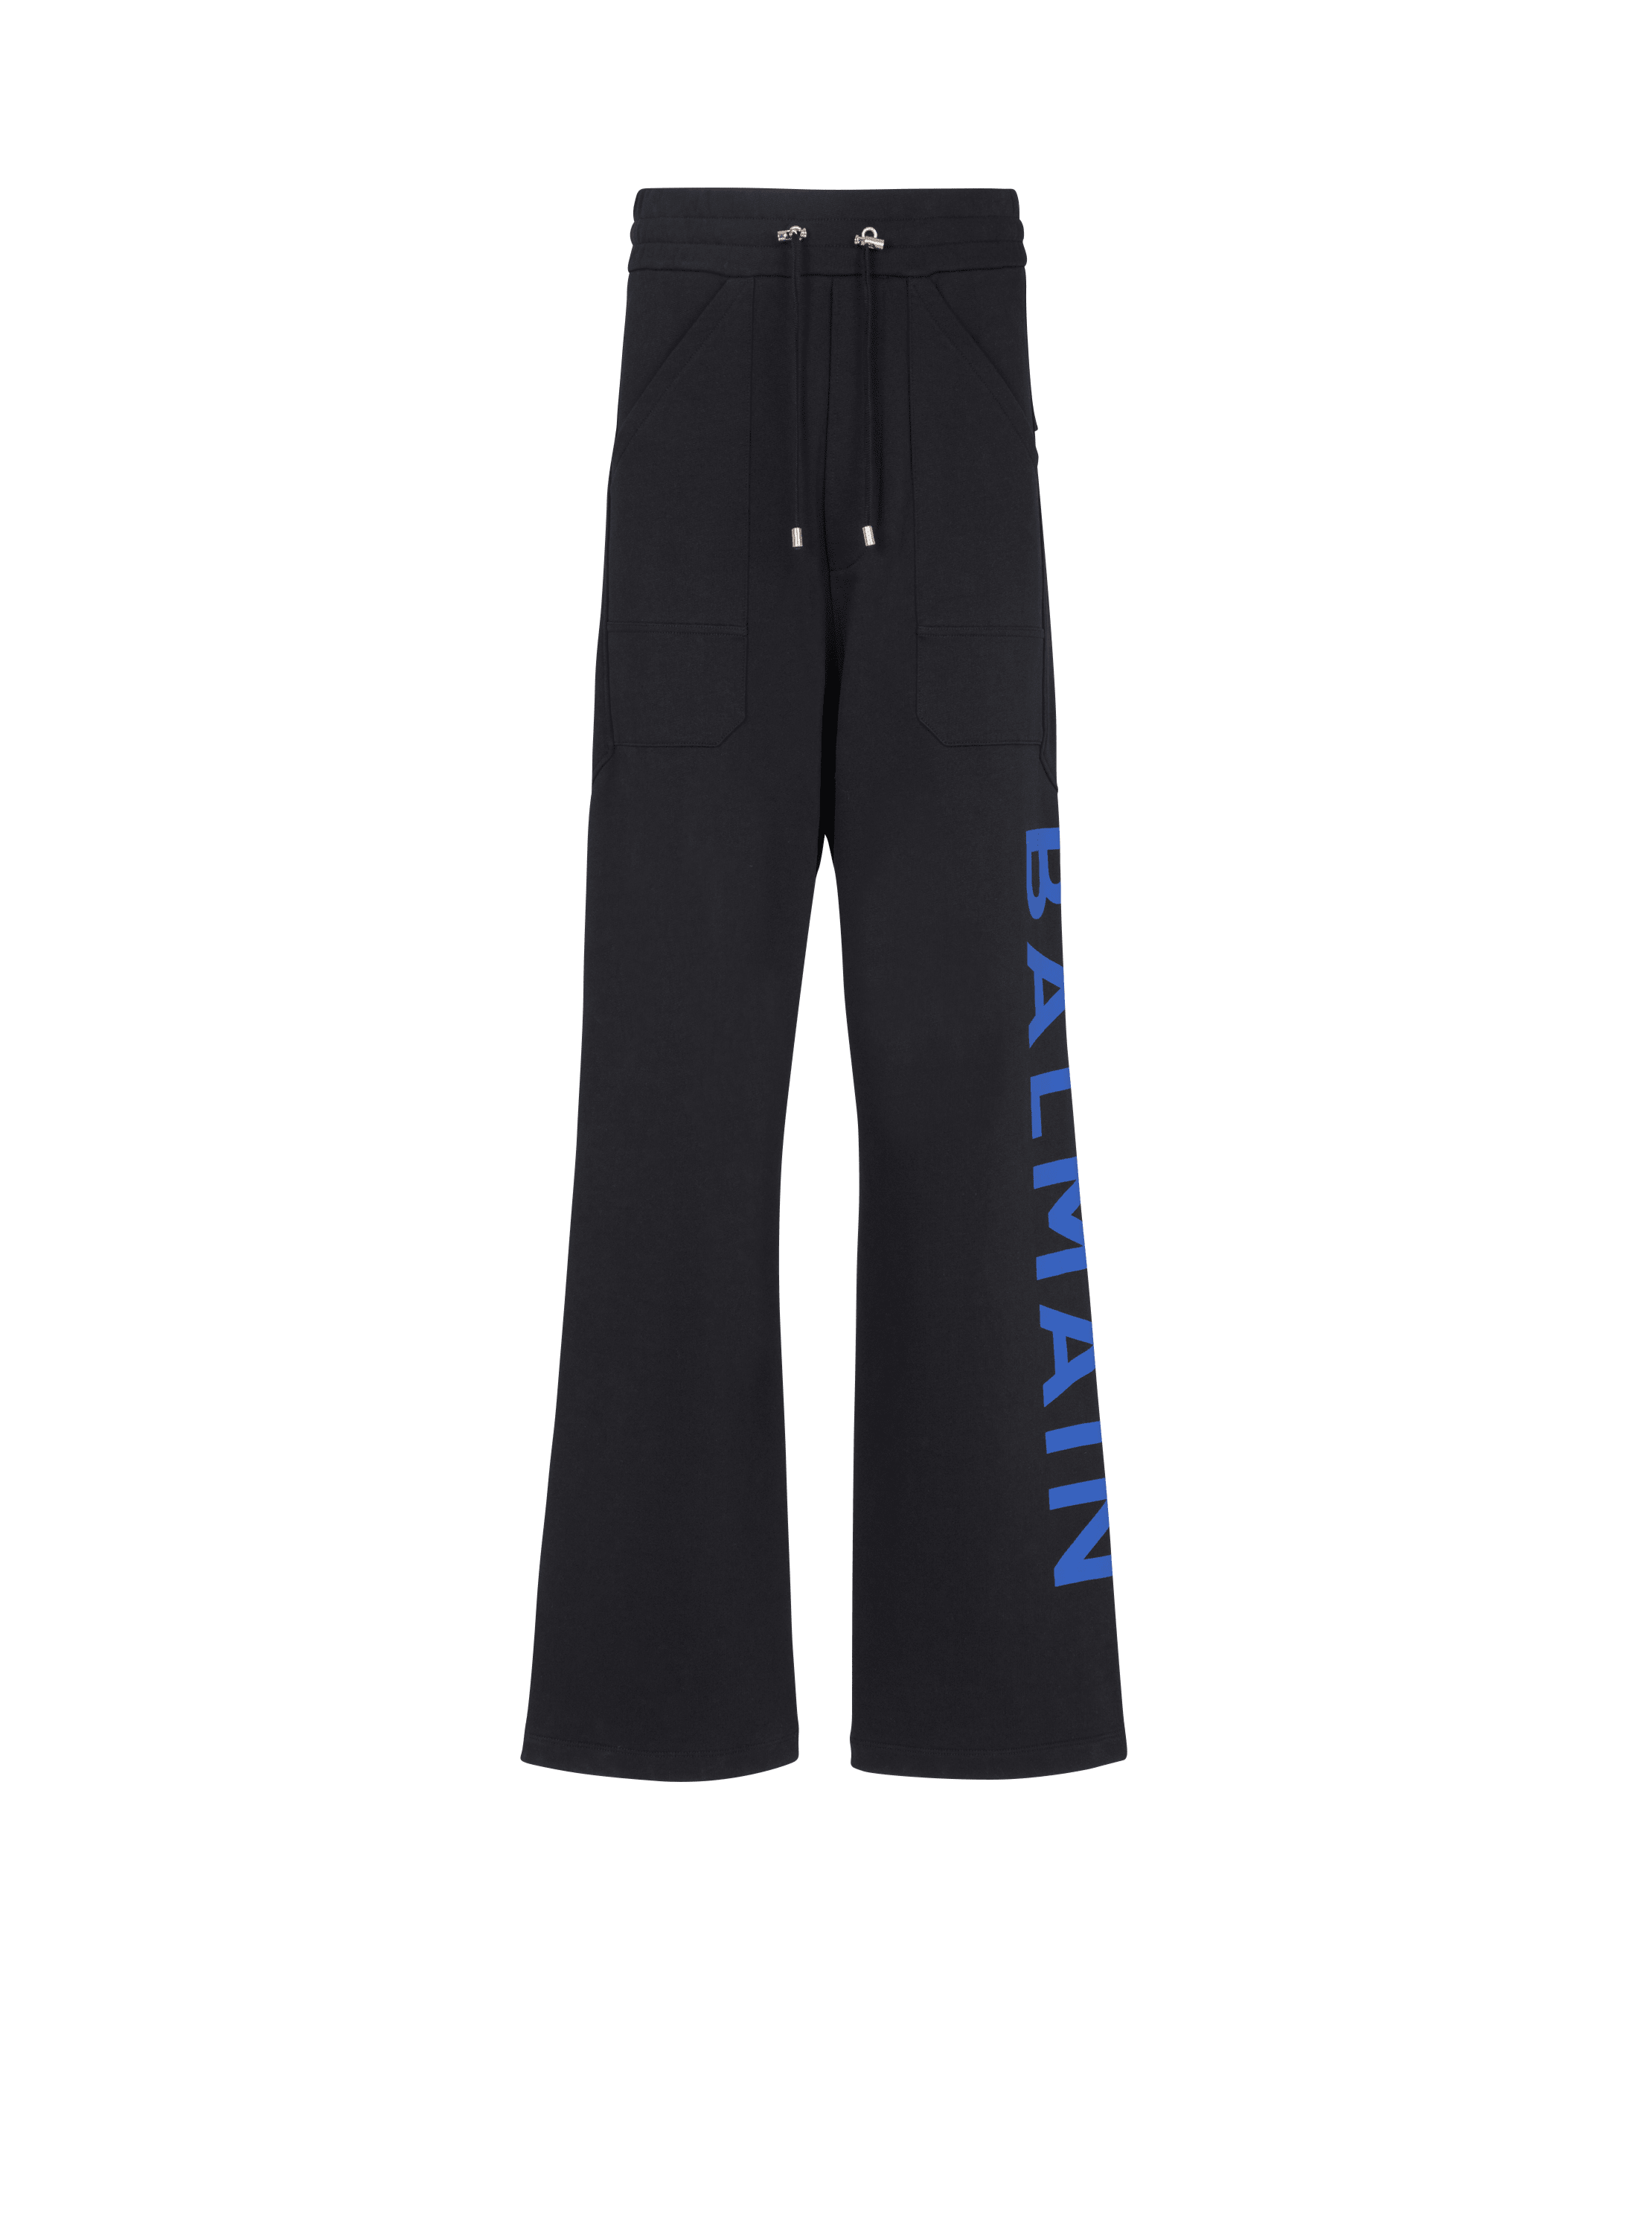 Jogging bottoms in eco-responsible cotton with Balmain logo, black, hi-res